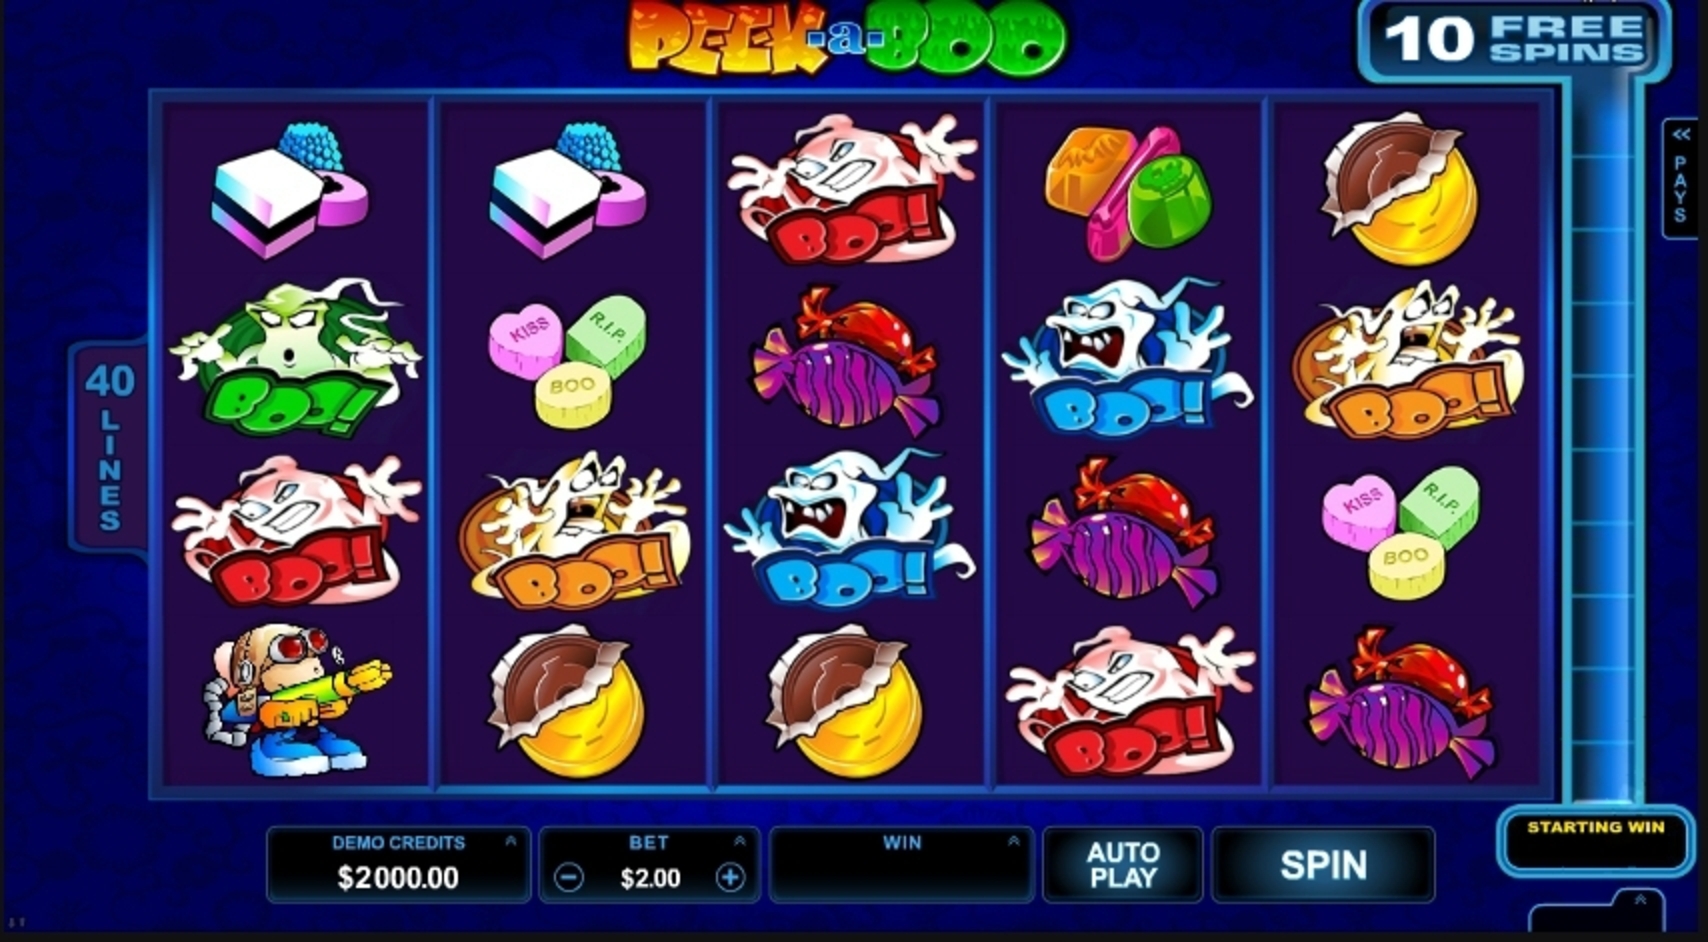 Reels in Peek-a-Boo Slot Game by Microgaming